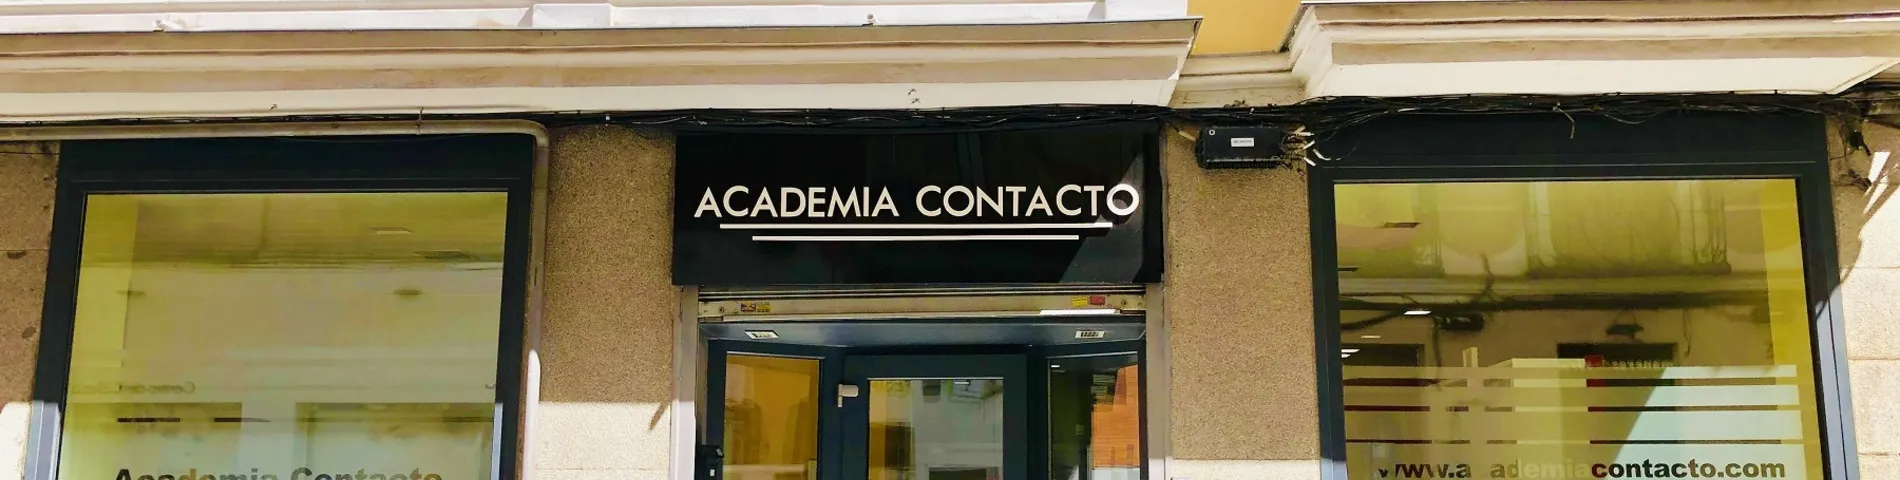 Academia Contacto afbeelding 1